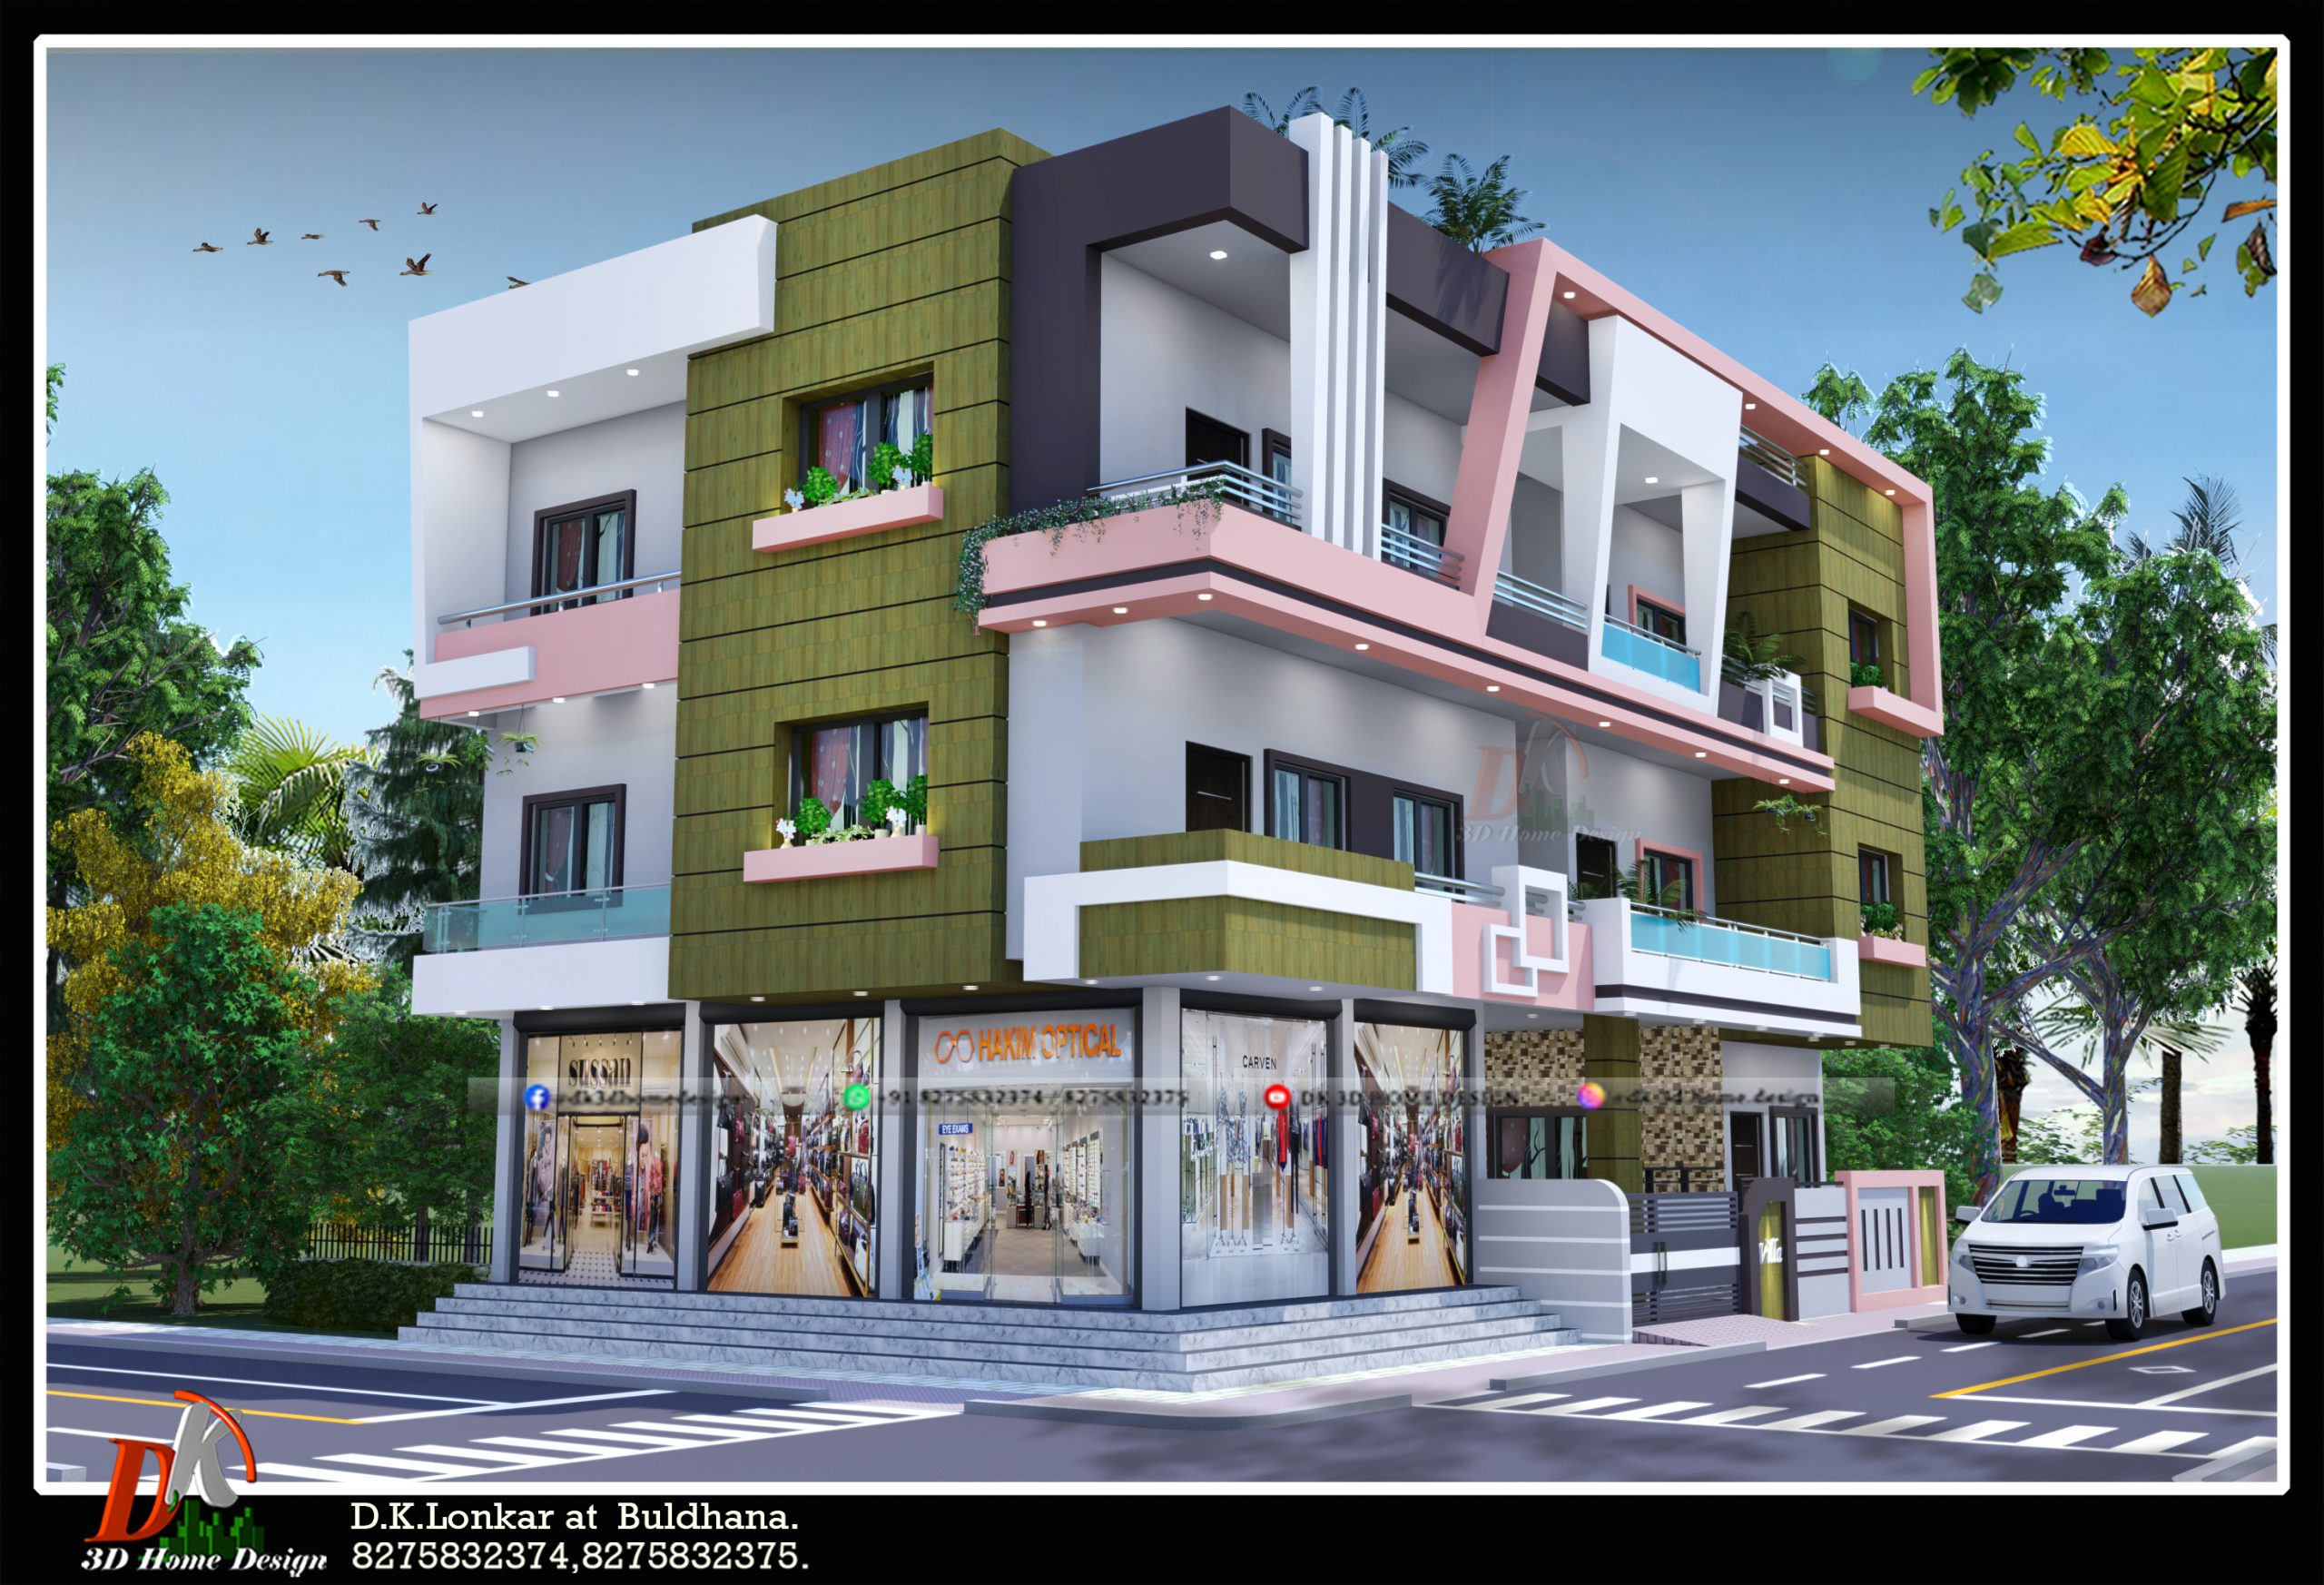 G+2 house elevation design with shop